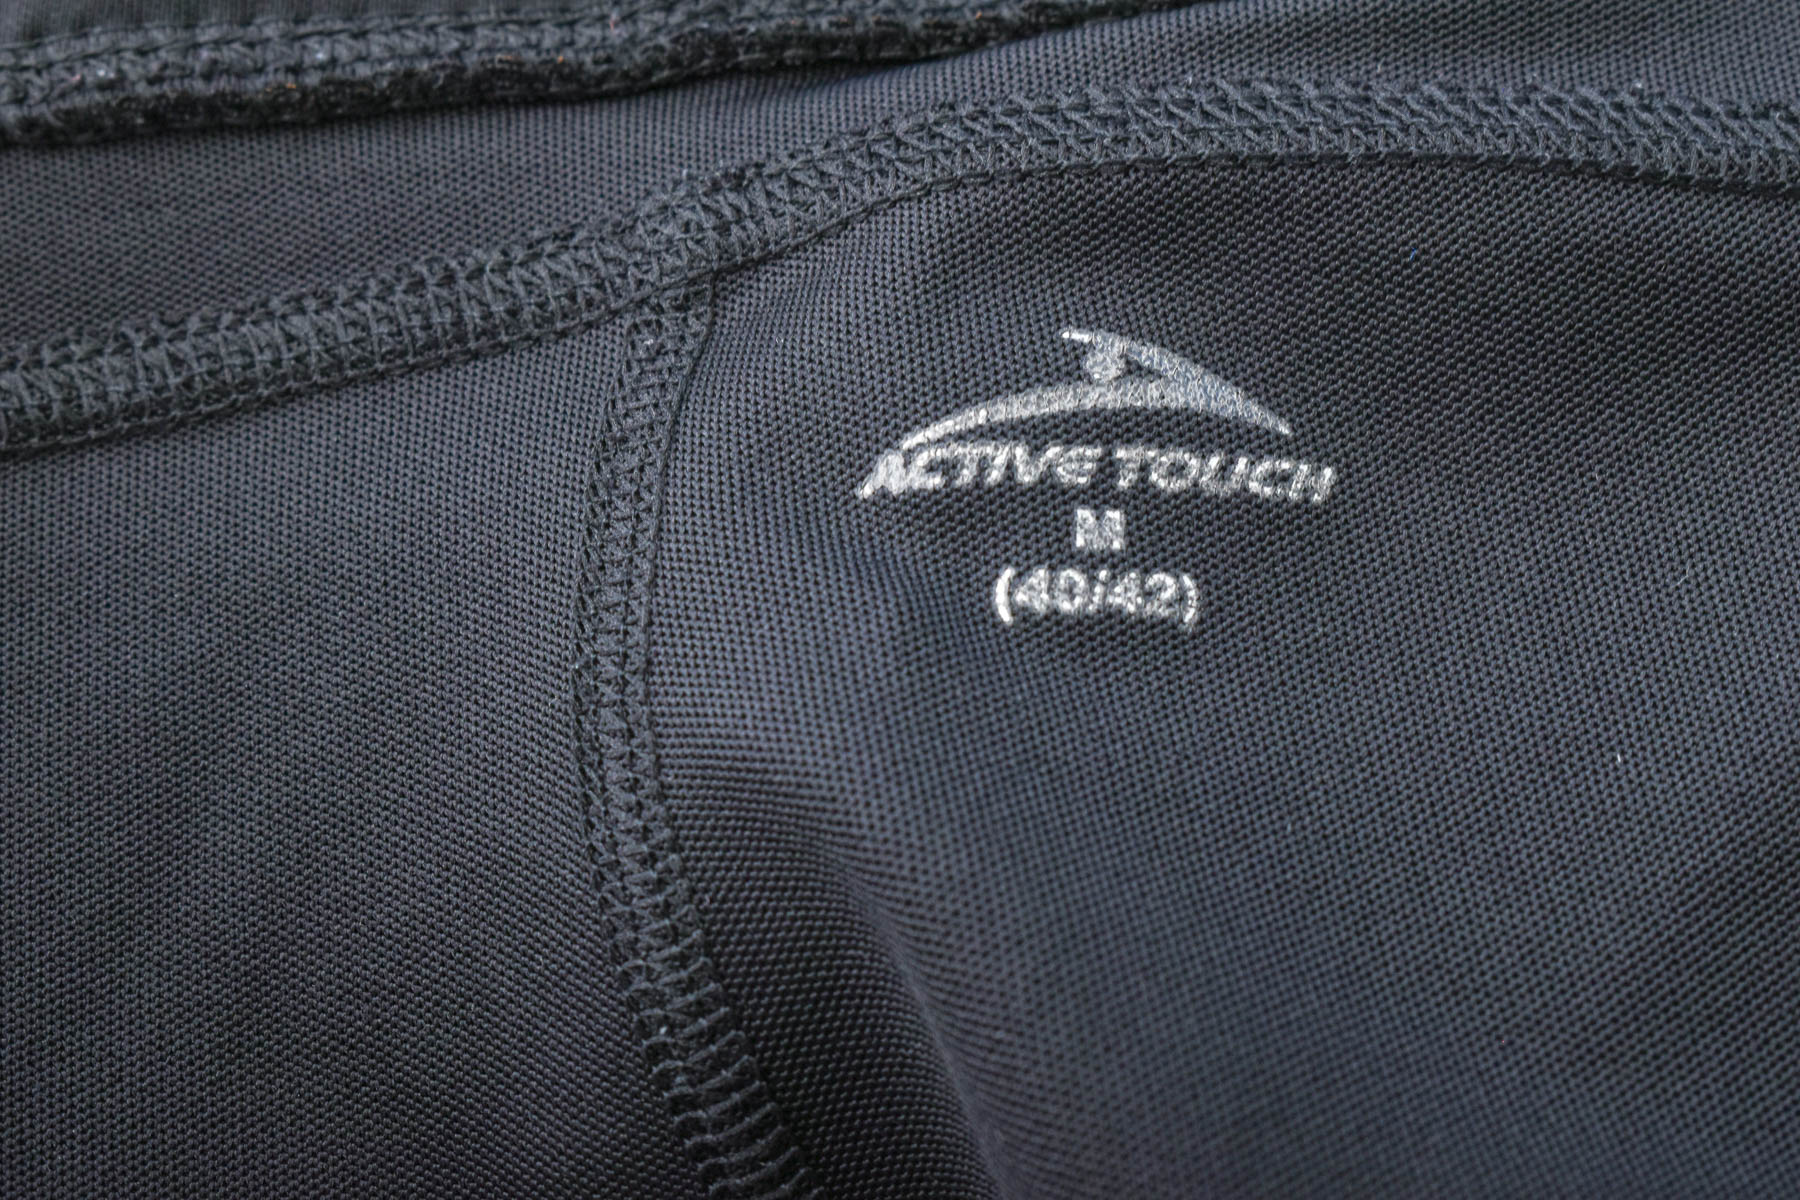 Trening pentru damă - Active Touch - 2